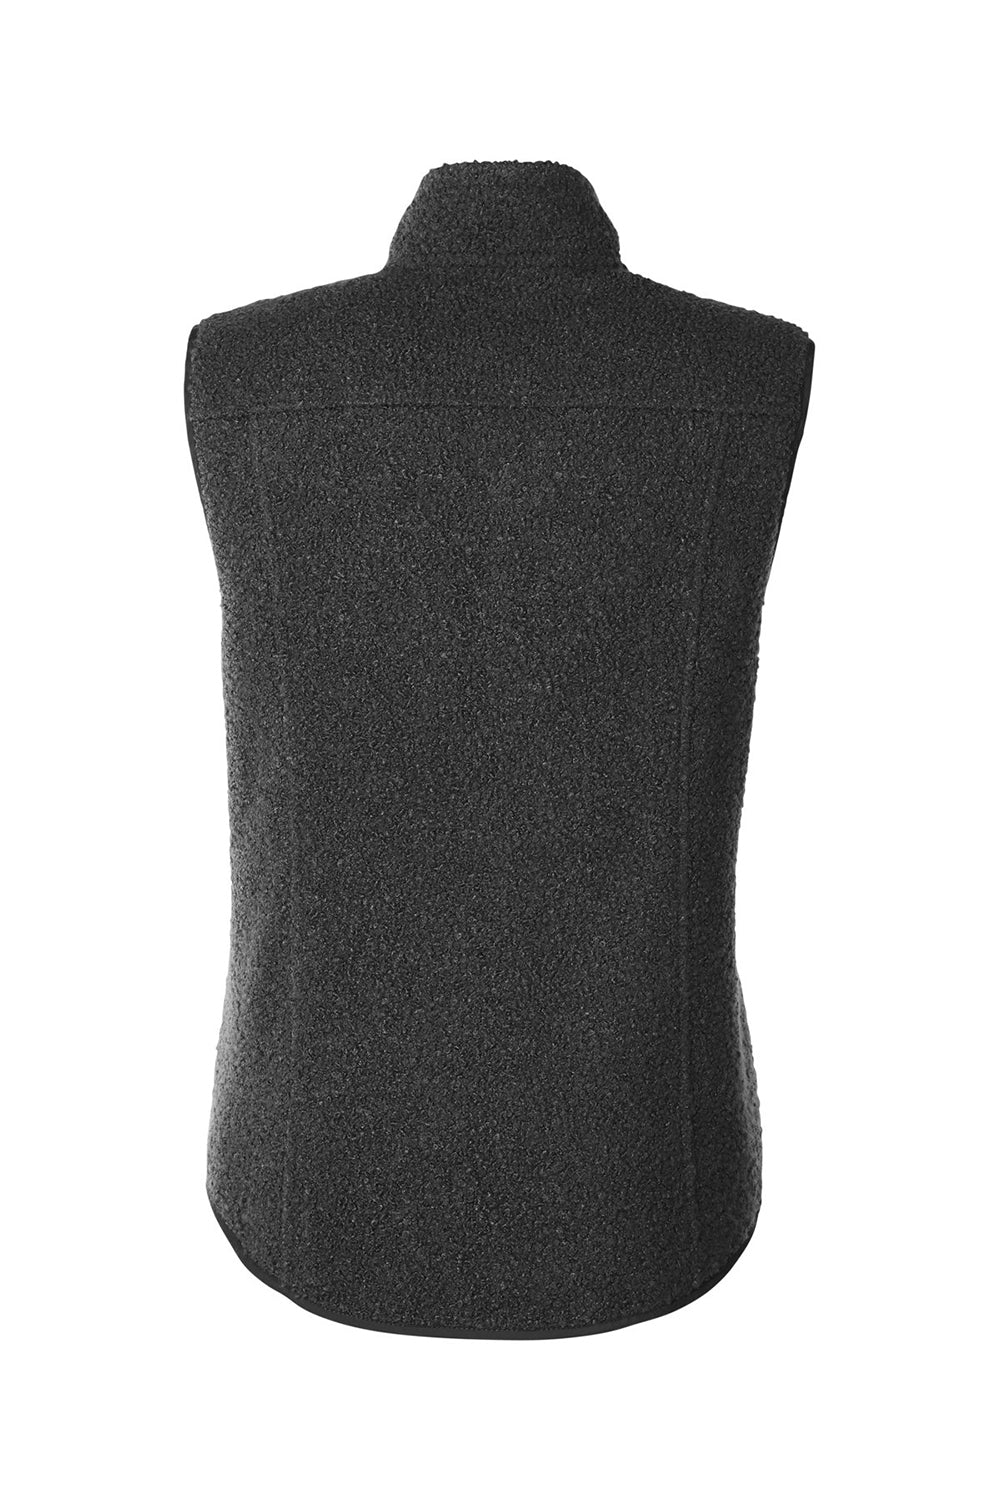 North End NE714W Womens Aura Sweater Fleece Full Zip Vest Black Flat Back